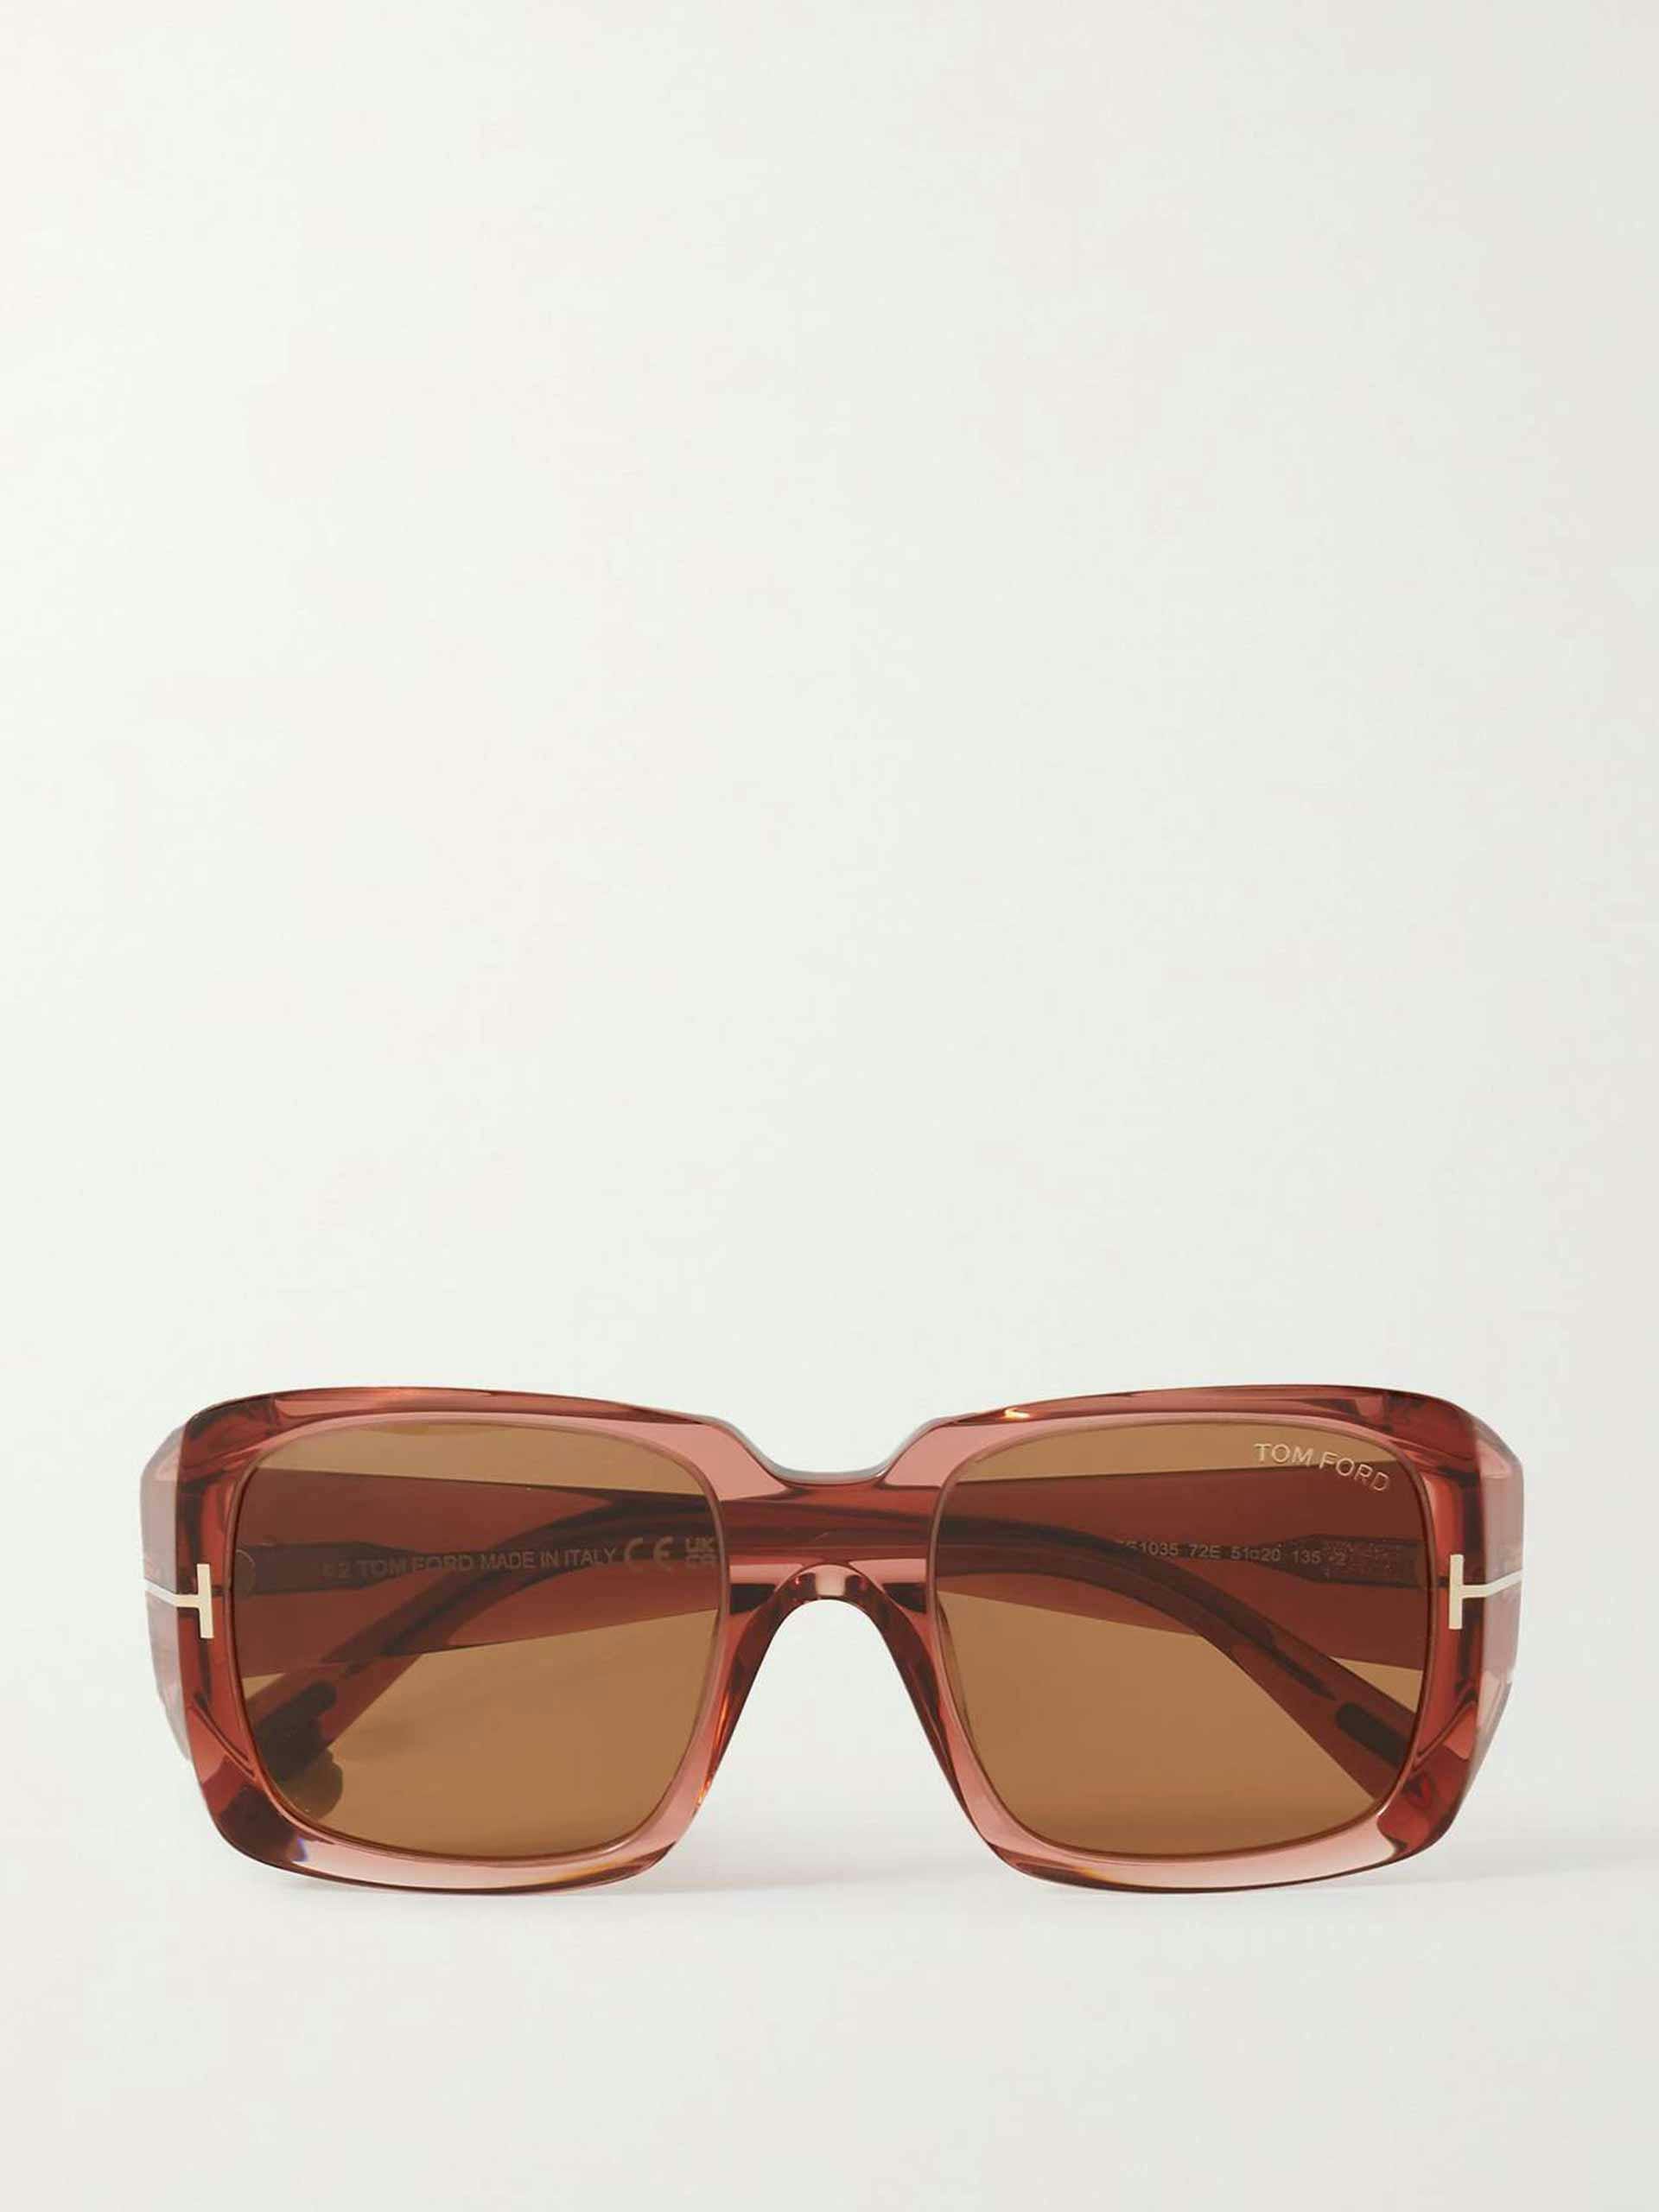 Pink square-frame acetate sunglasses